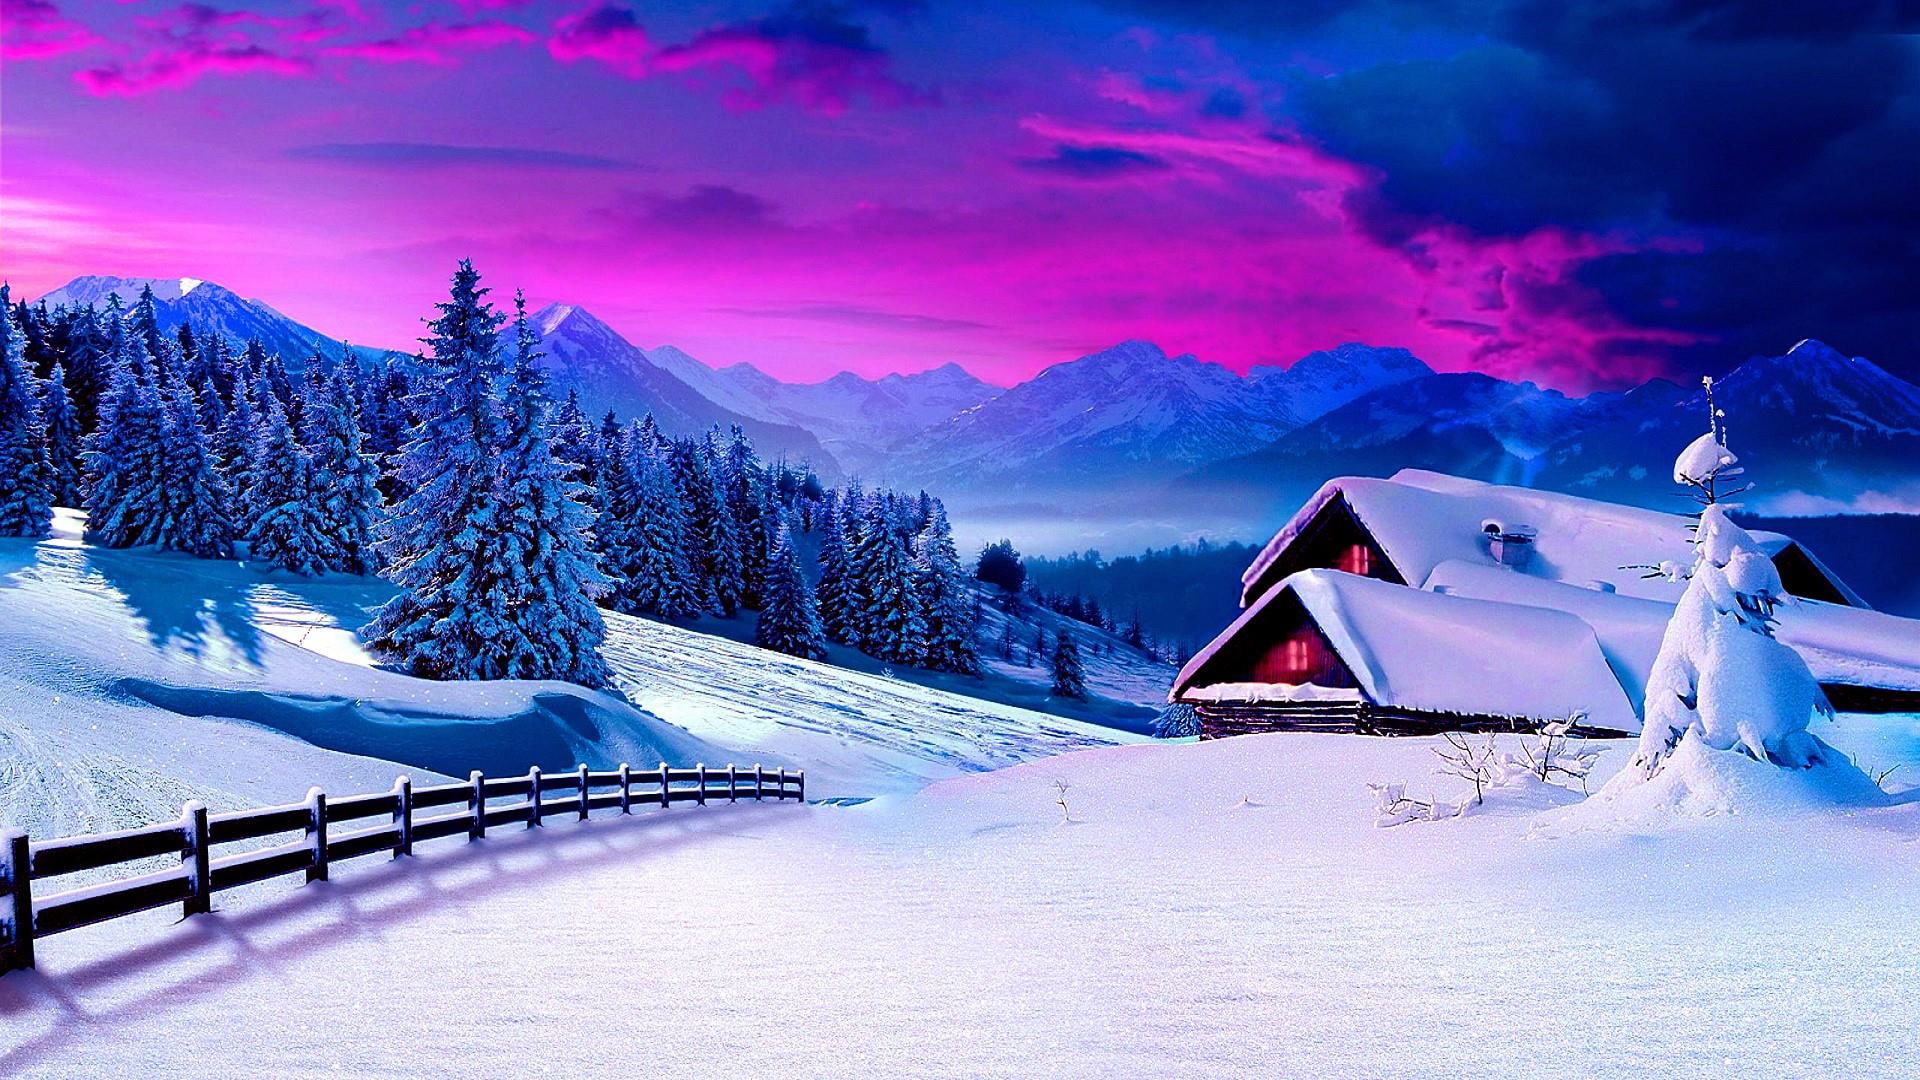 snowy, winter, blue, nature, sky, freezing, house, mountain range